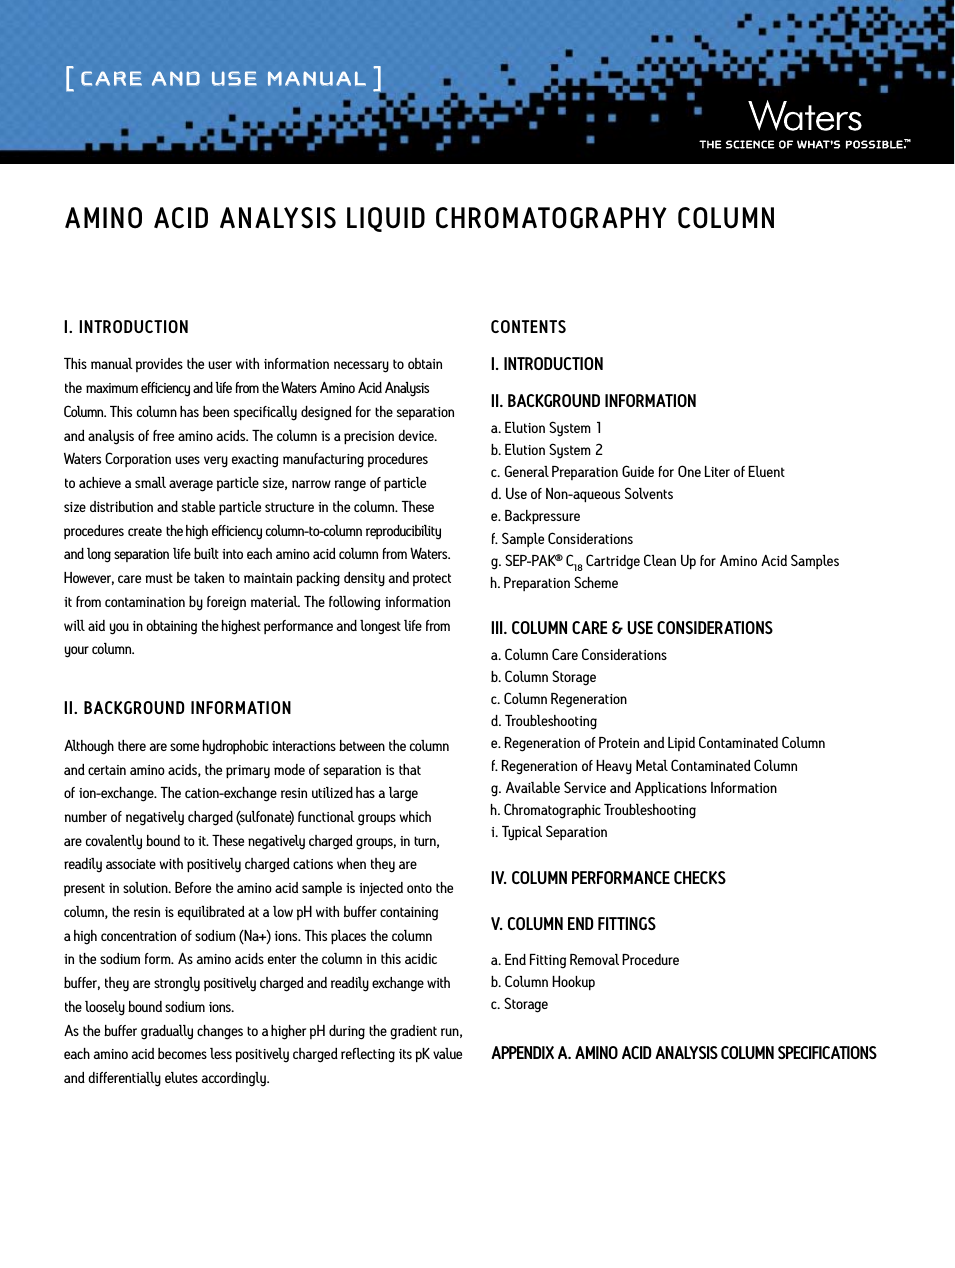 Amino Acid Analysis Liquid Chromatography Column